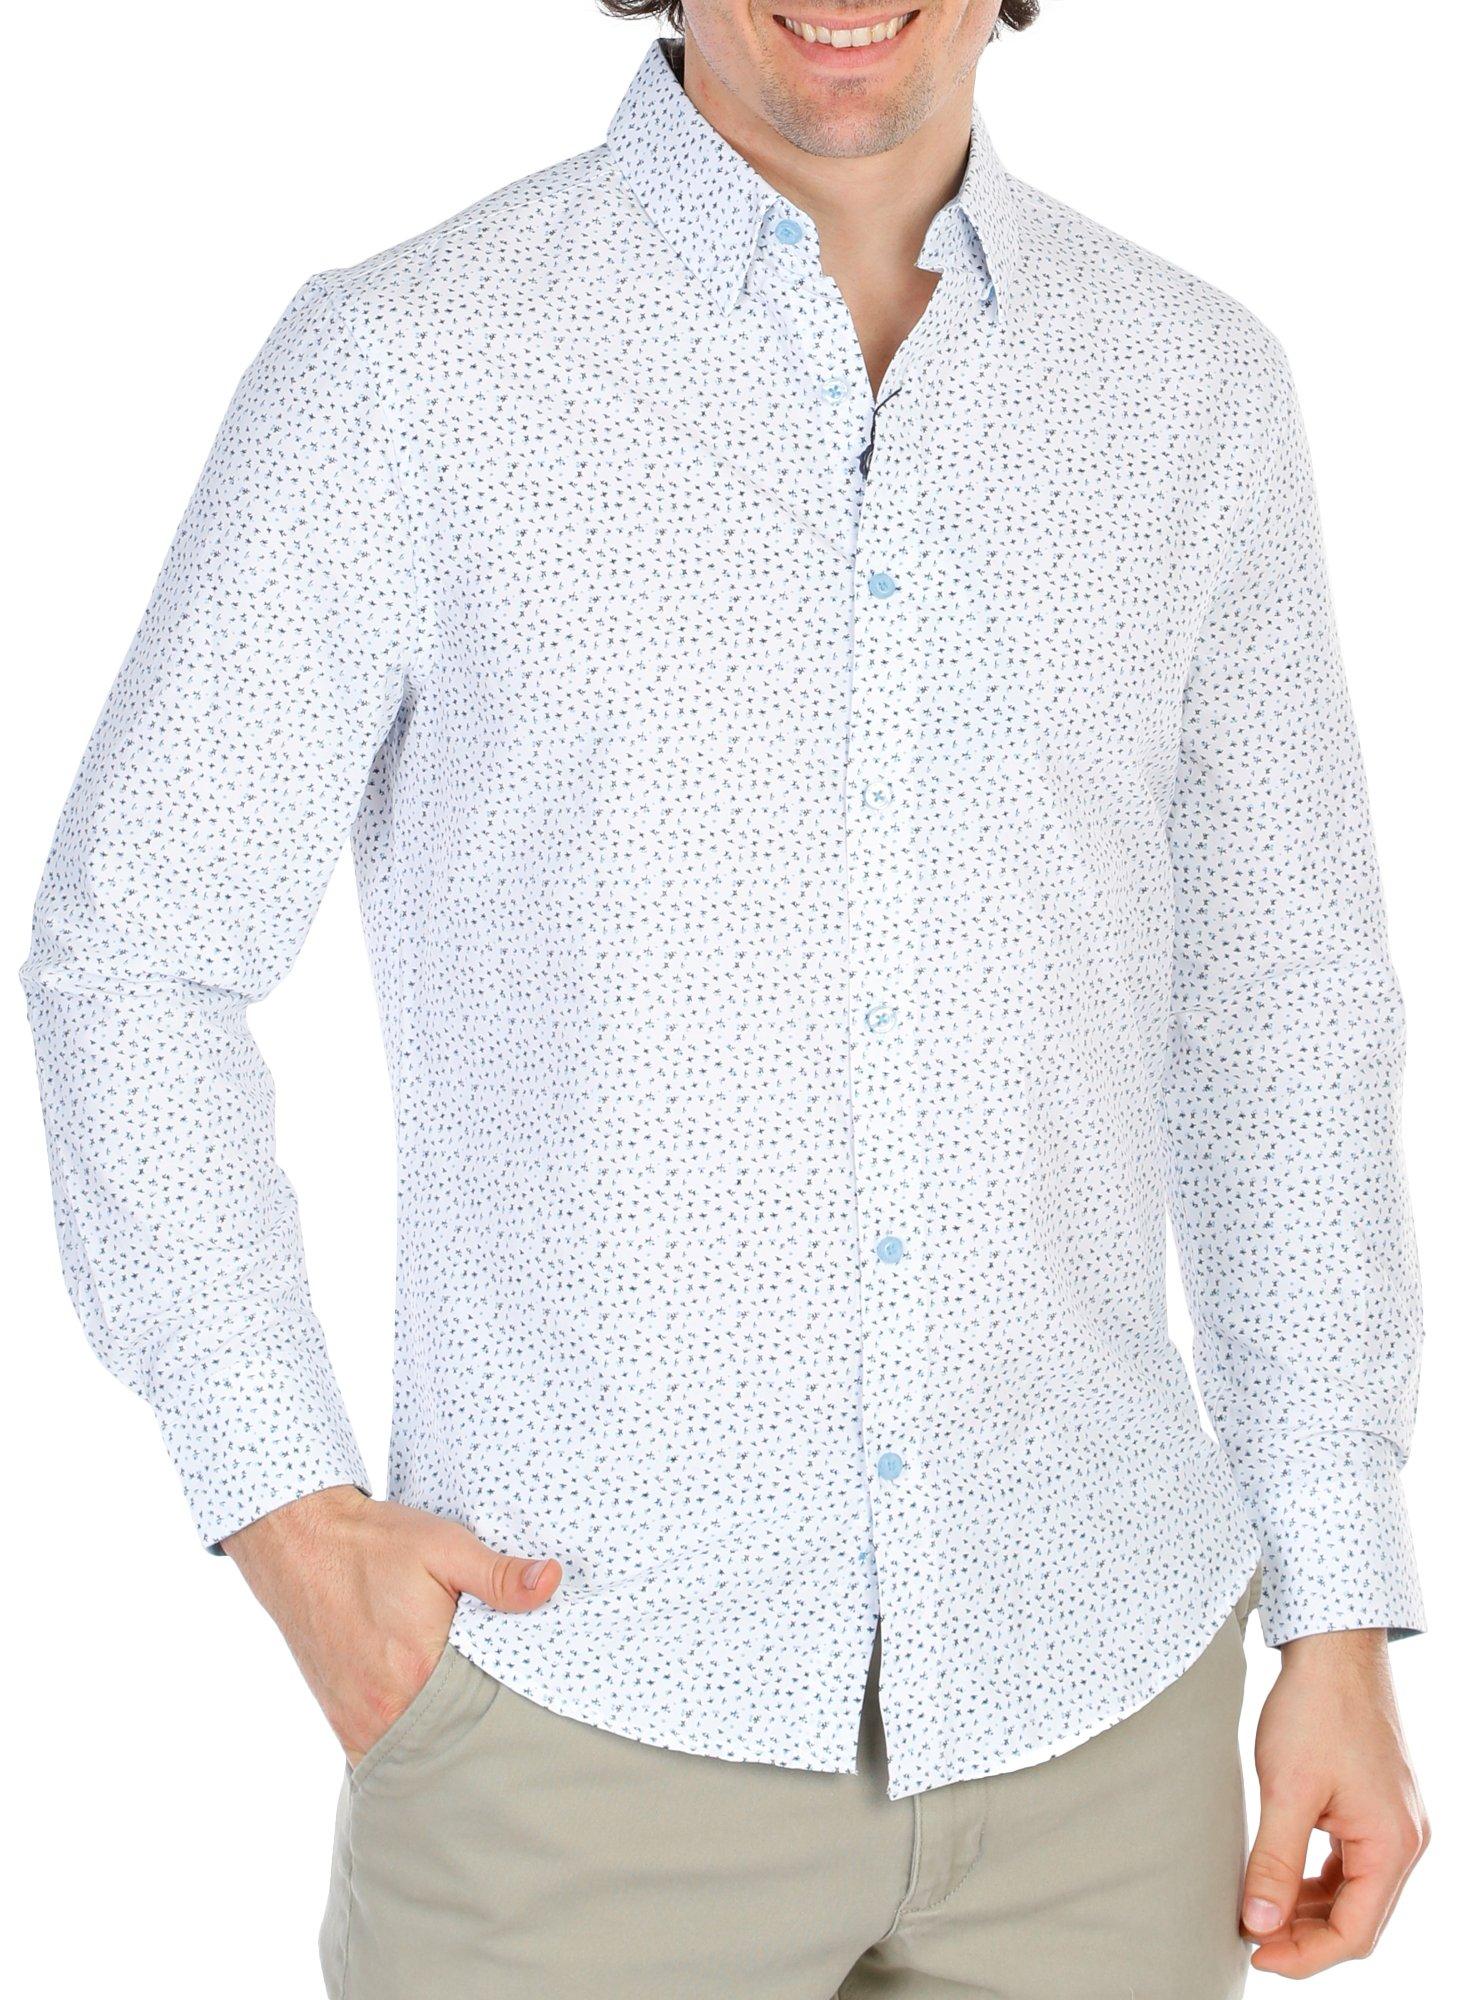 Men's Floral Print Button Down Shirt